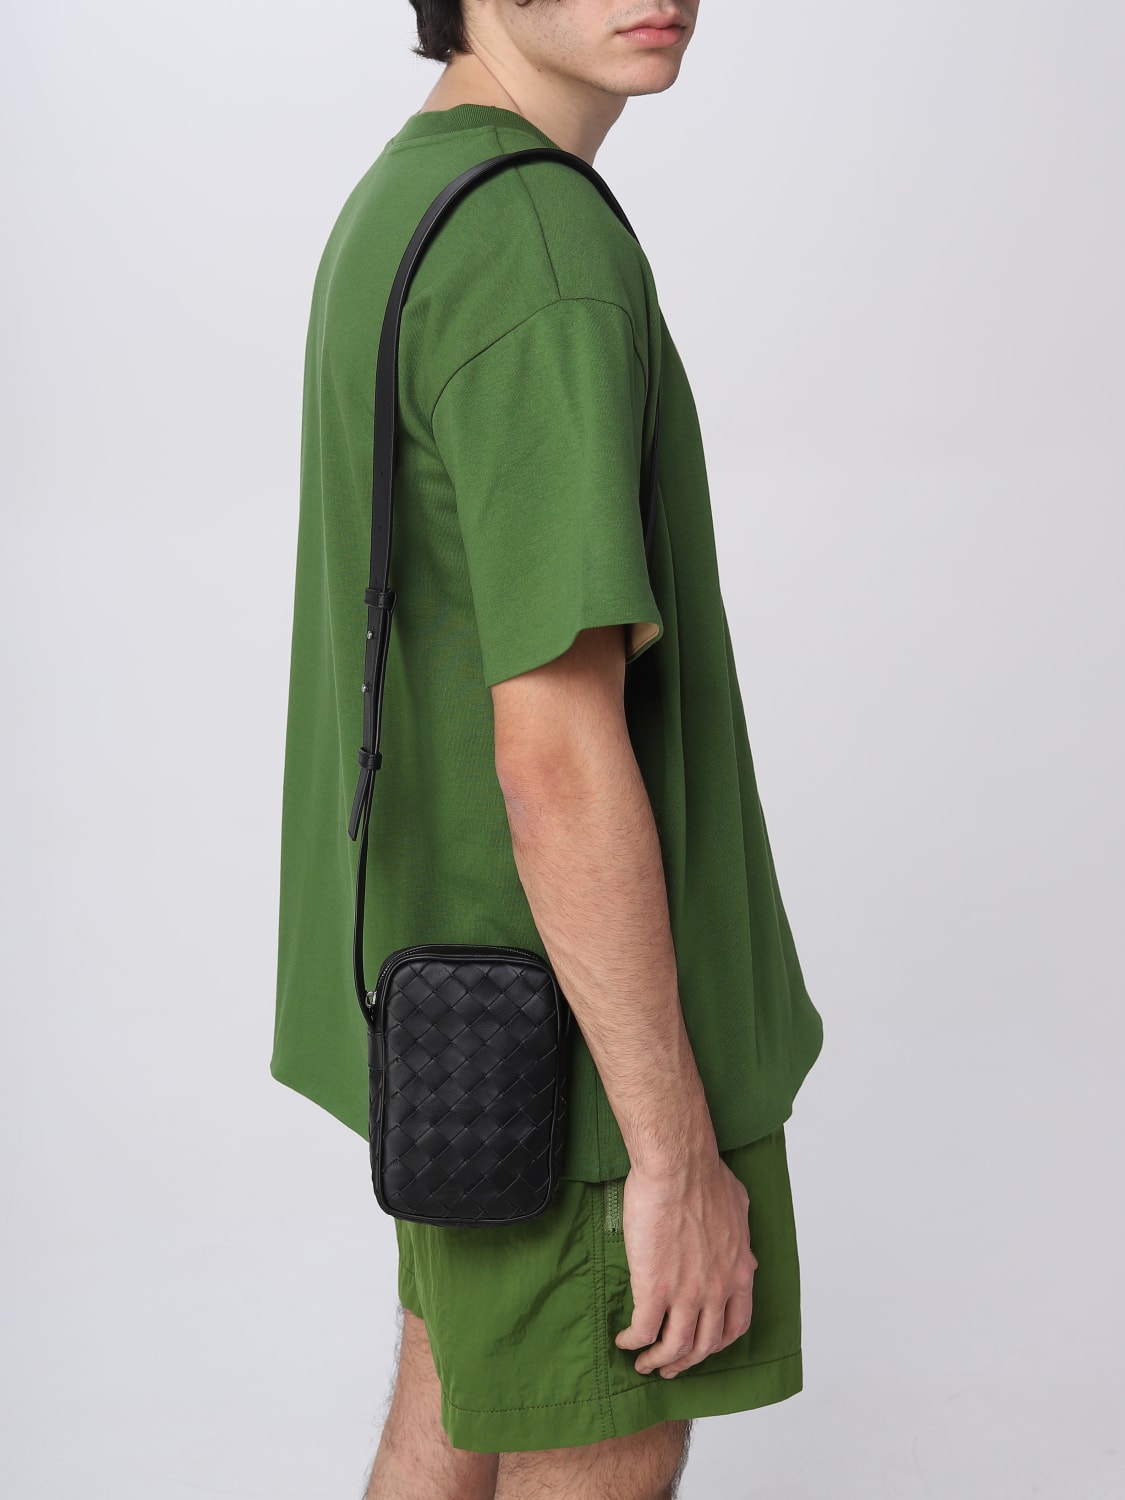 Bottega Veneta - Men - Intrecciato Leather Messenger Bag Green